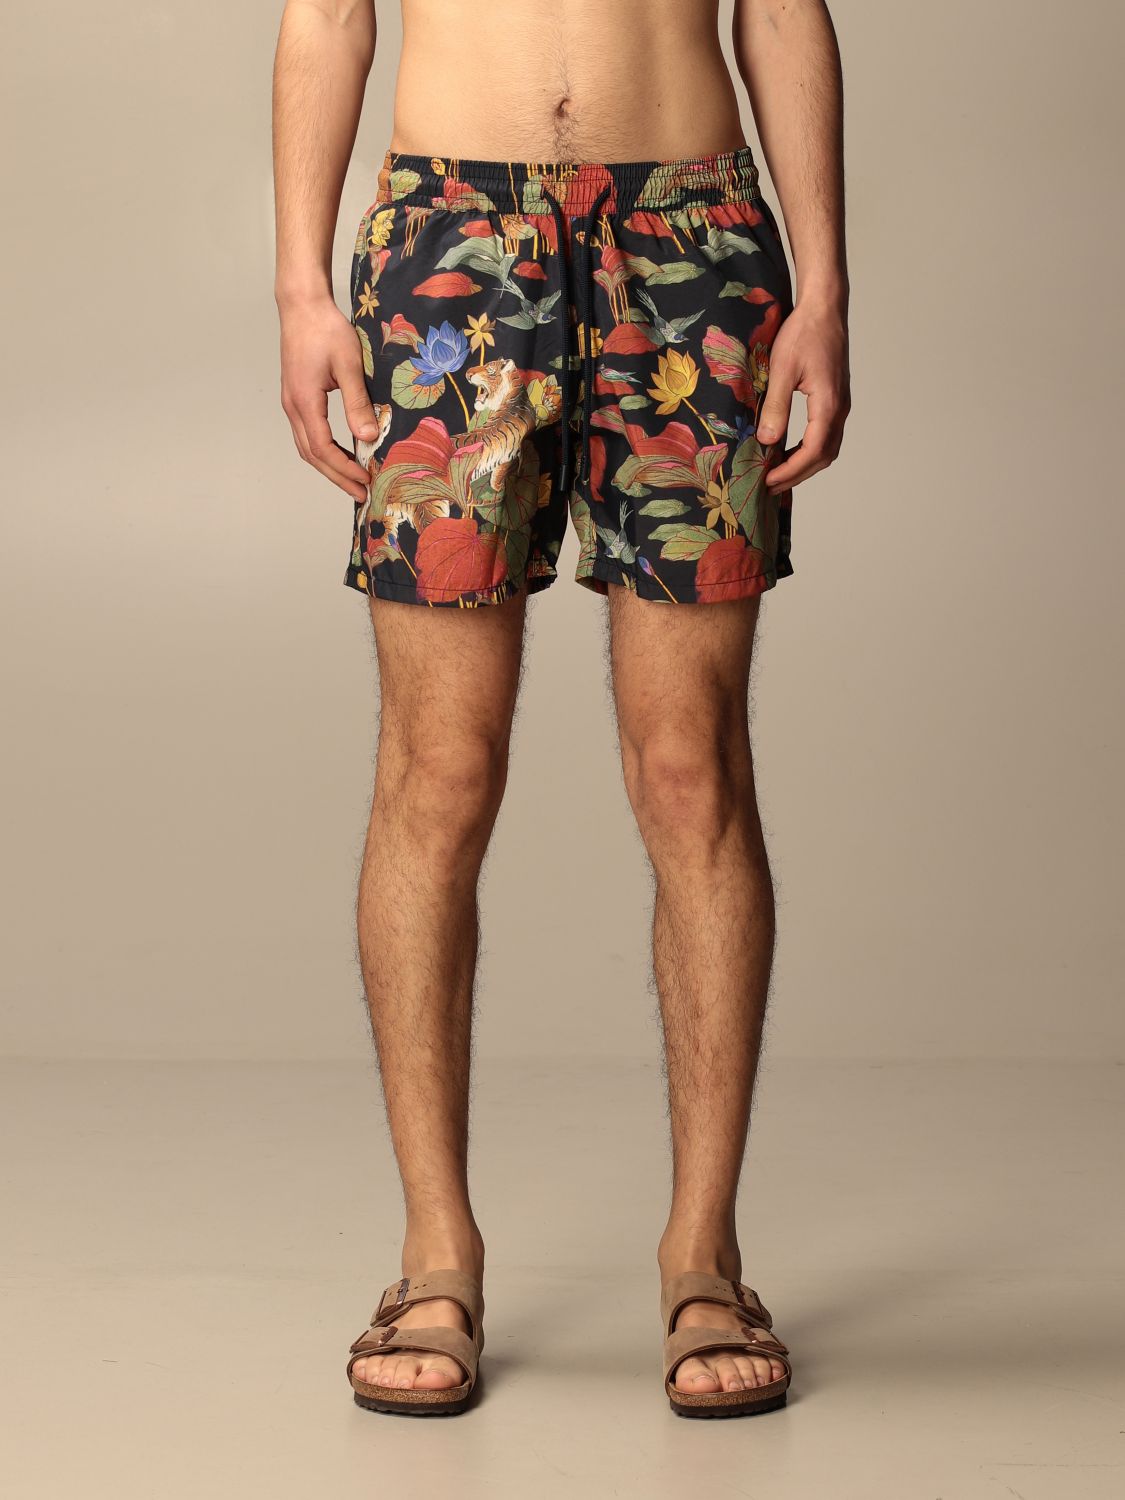 toewijzen stijfheid achterlijk persoon ETRO: swim shorts in patterned technical fabric - Multicolor | Etro  swimsuit 1B350 4069 online on GIGLIO.COM